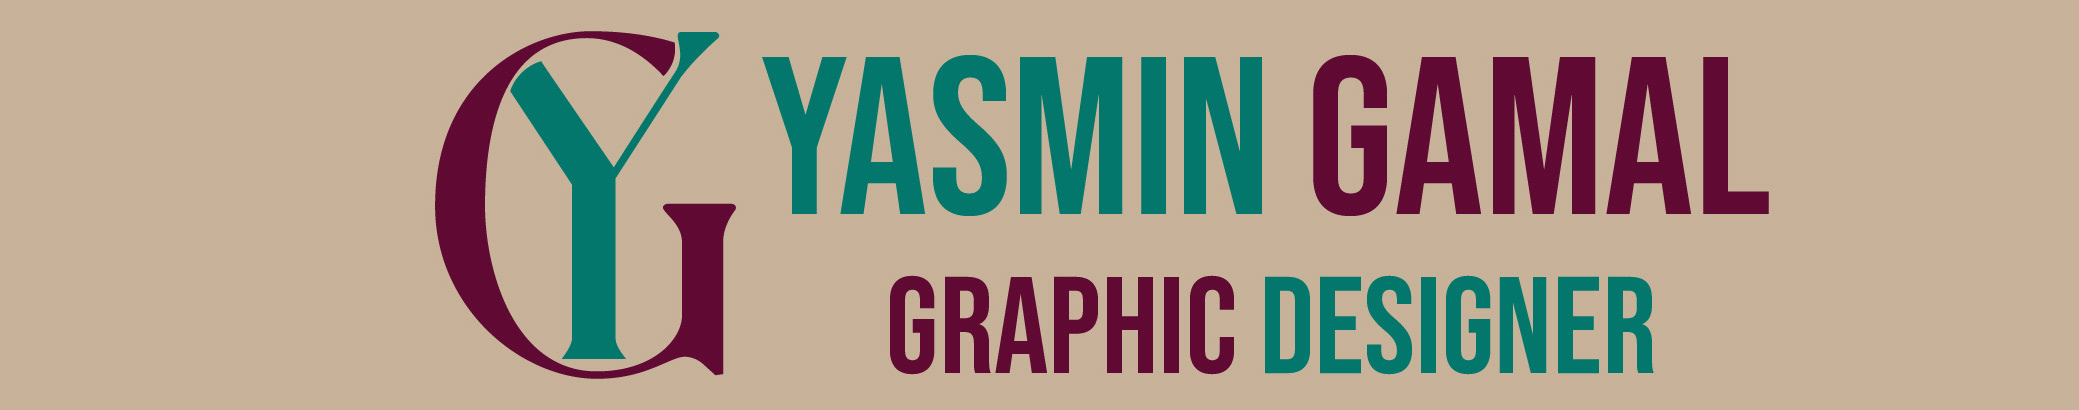 Yasmin Gamal's profile banner